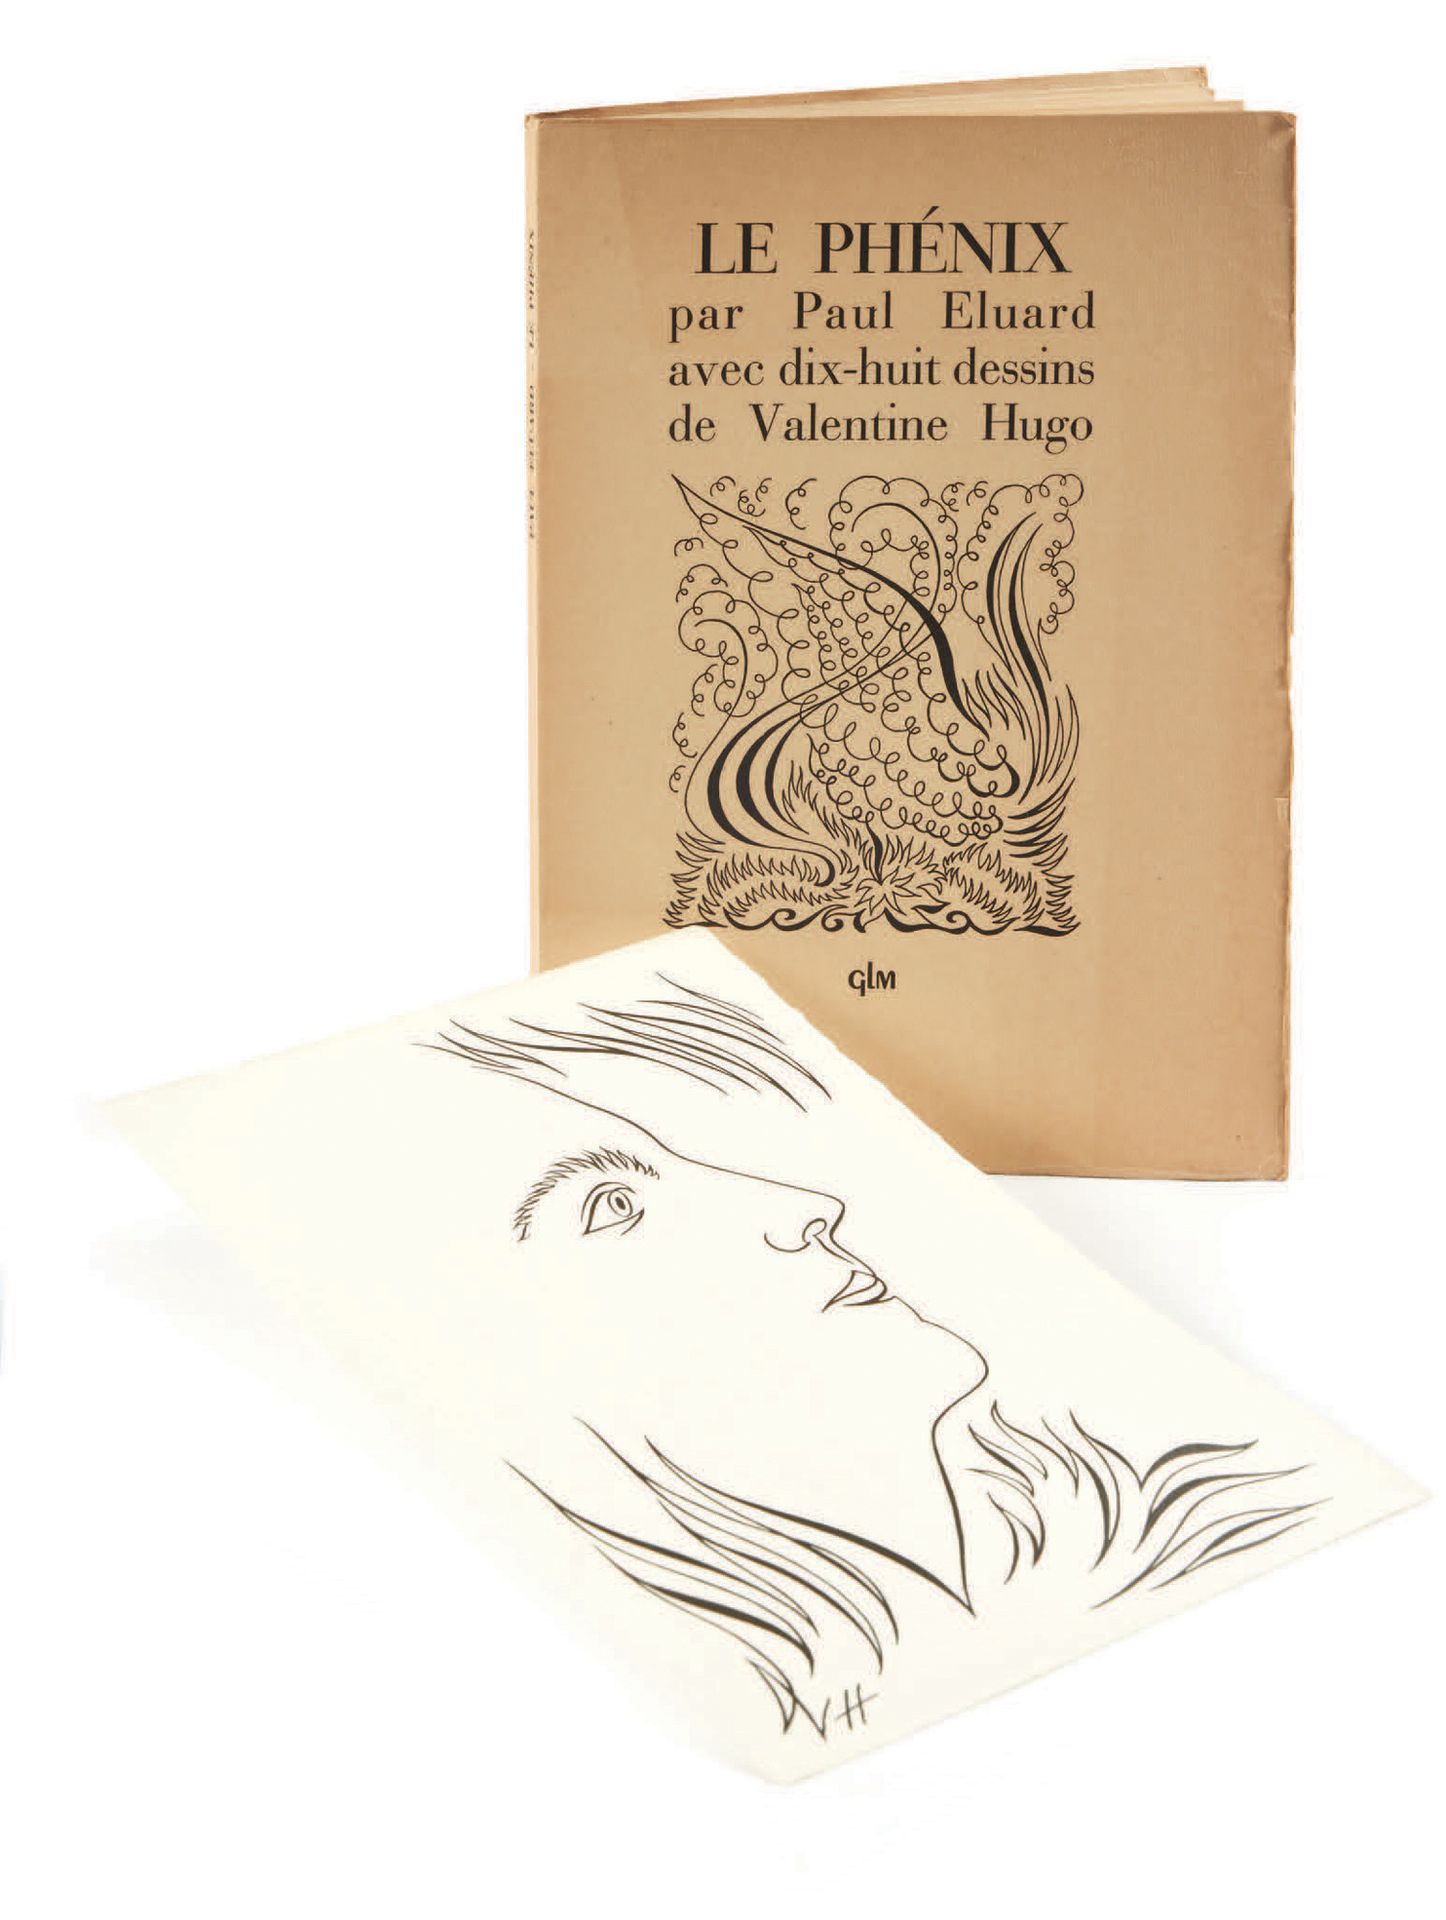 Paul Eluard. Le Phénix与瓦伦丁-雨果的18幅画。巴黎，GLM，1952年。
大8开本，平装本。
第一版，1951年12月完成。（Coron&hellip;